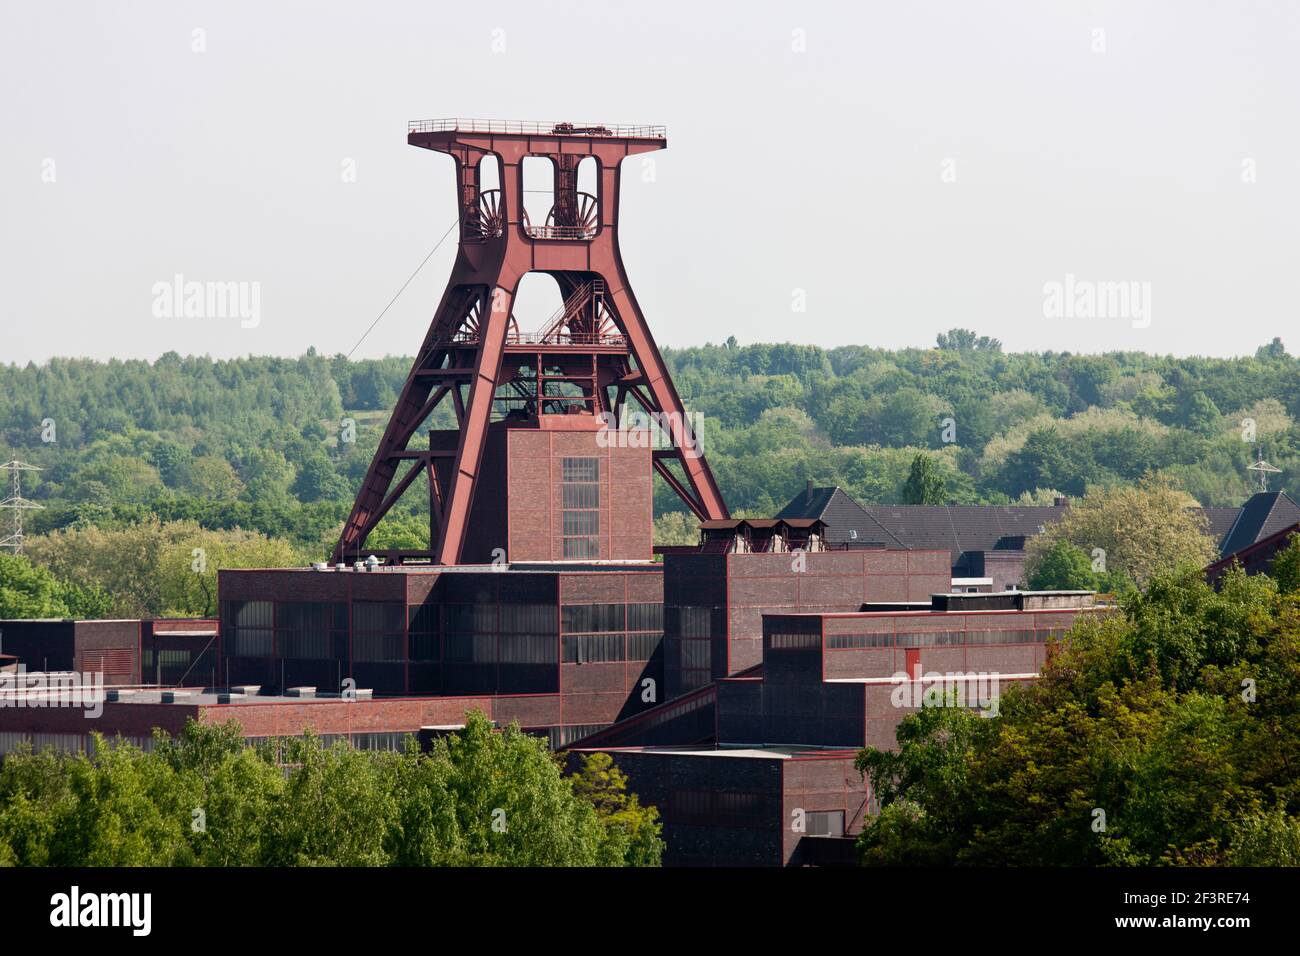 Wickelturm Schacht 12, Industriedenkmal Zeche Zollverein, Essen, Deutschland Stockfoto